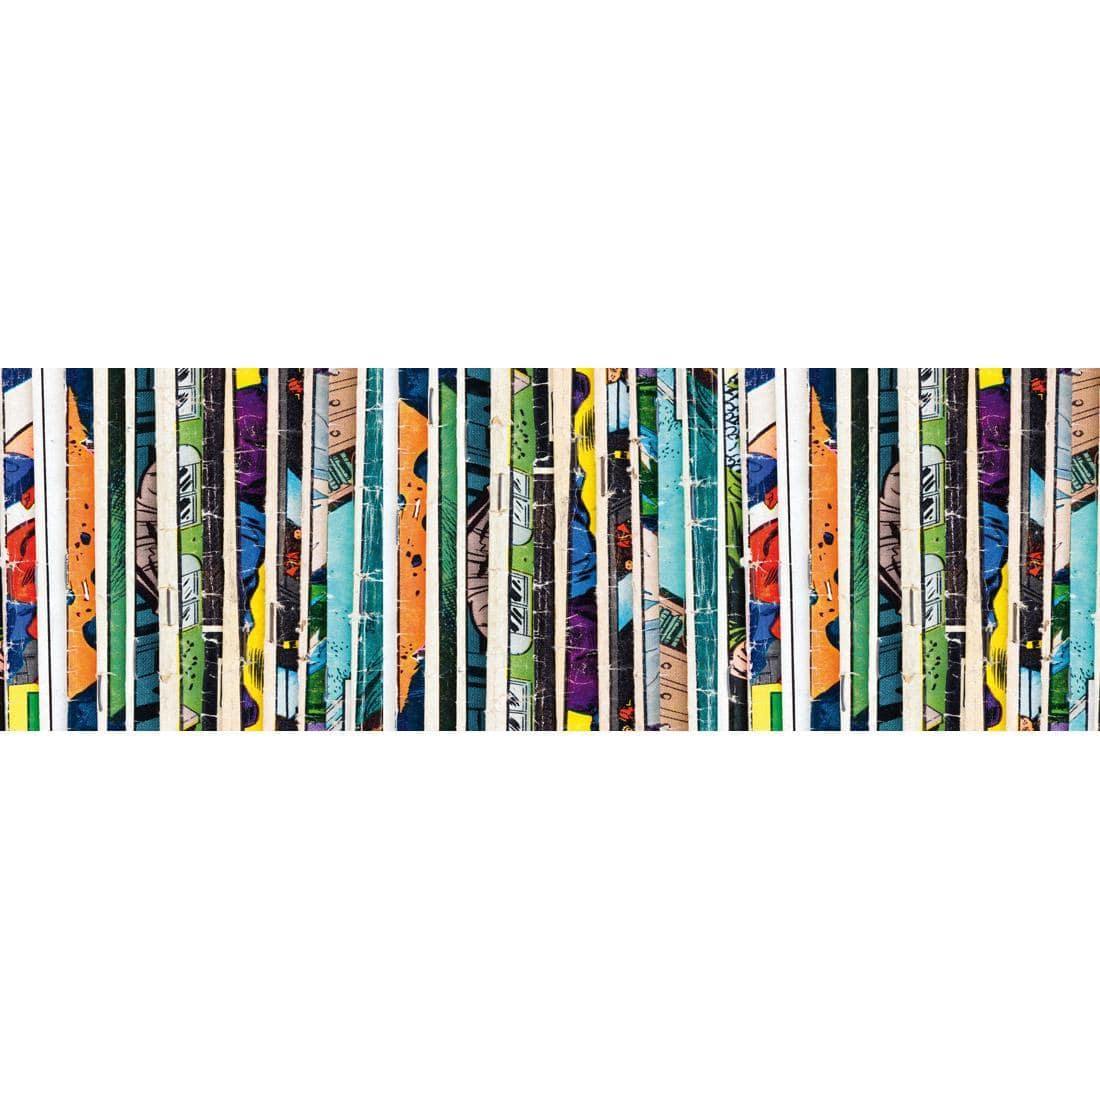 Book Spines (long) - wallart-australia - Canvas